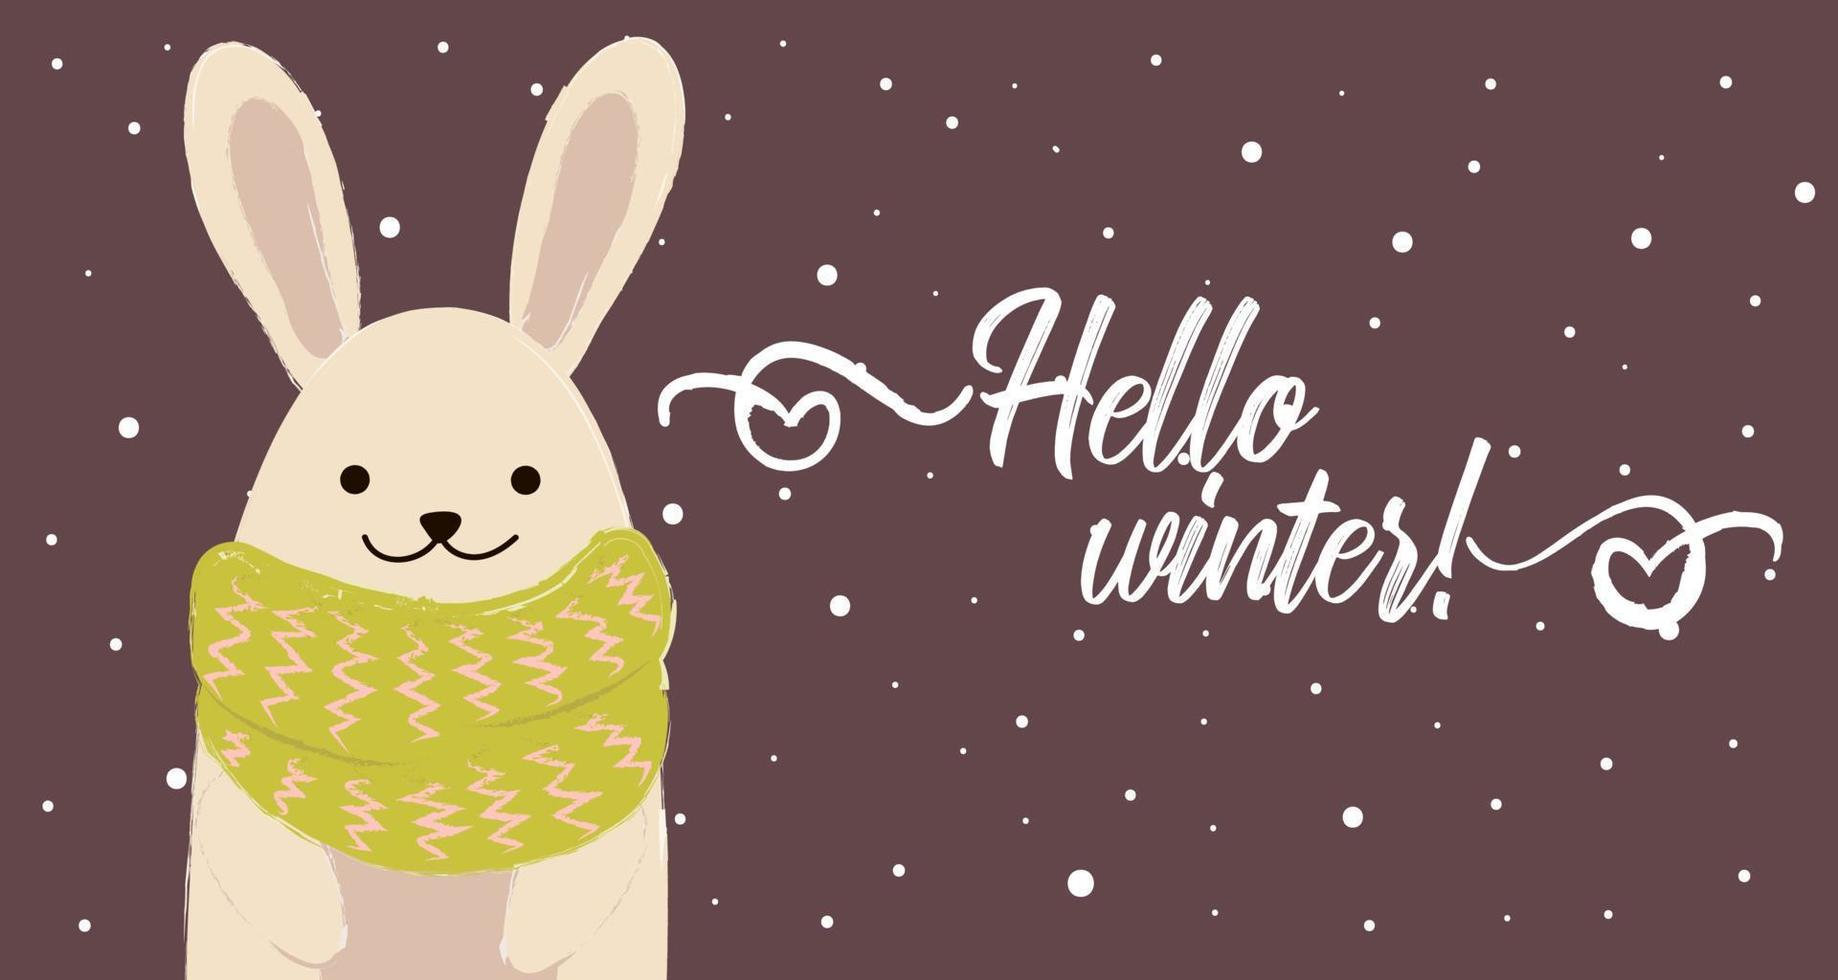 winterkonijn in sjaal schattig hallo winter vector